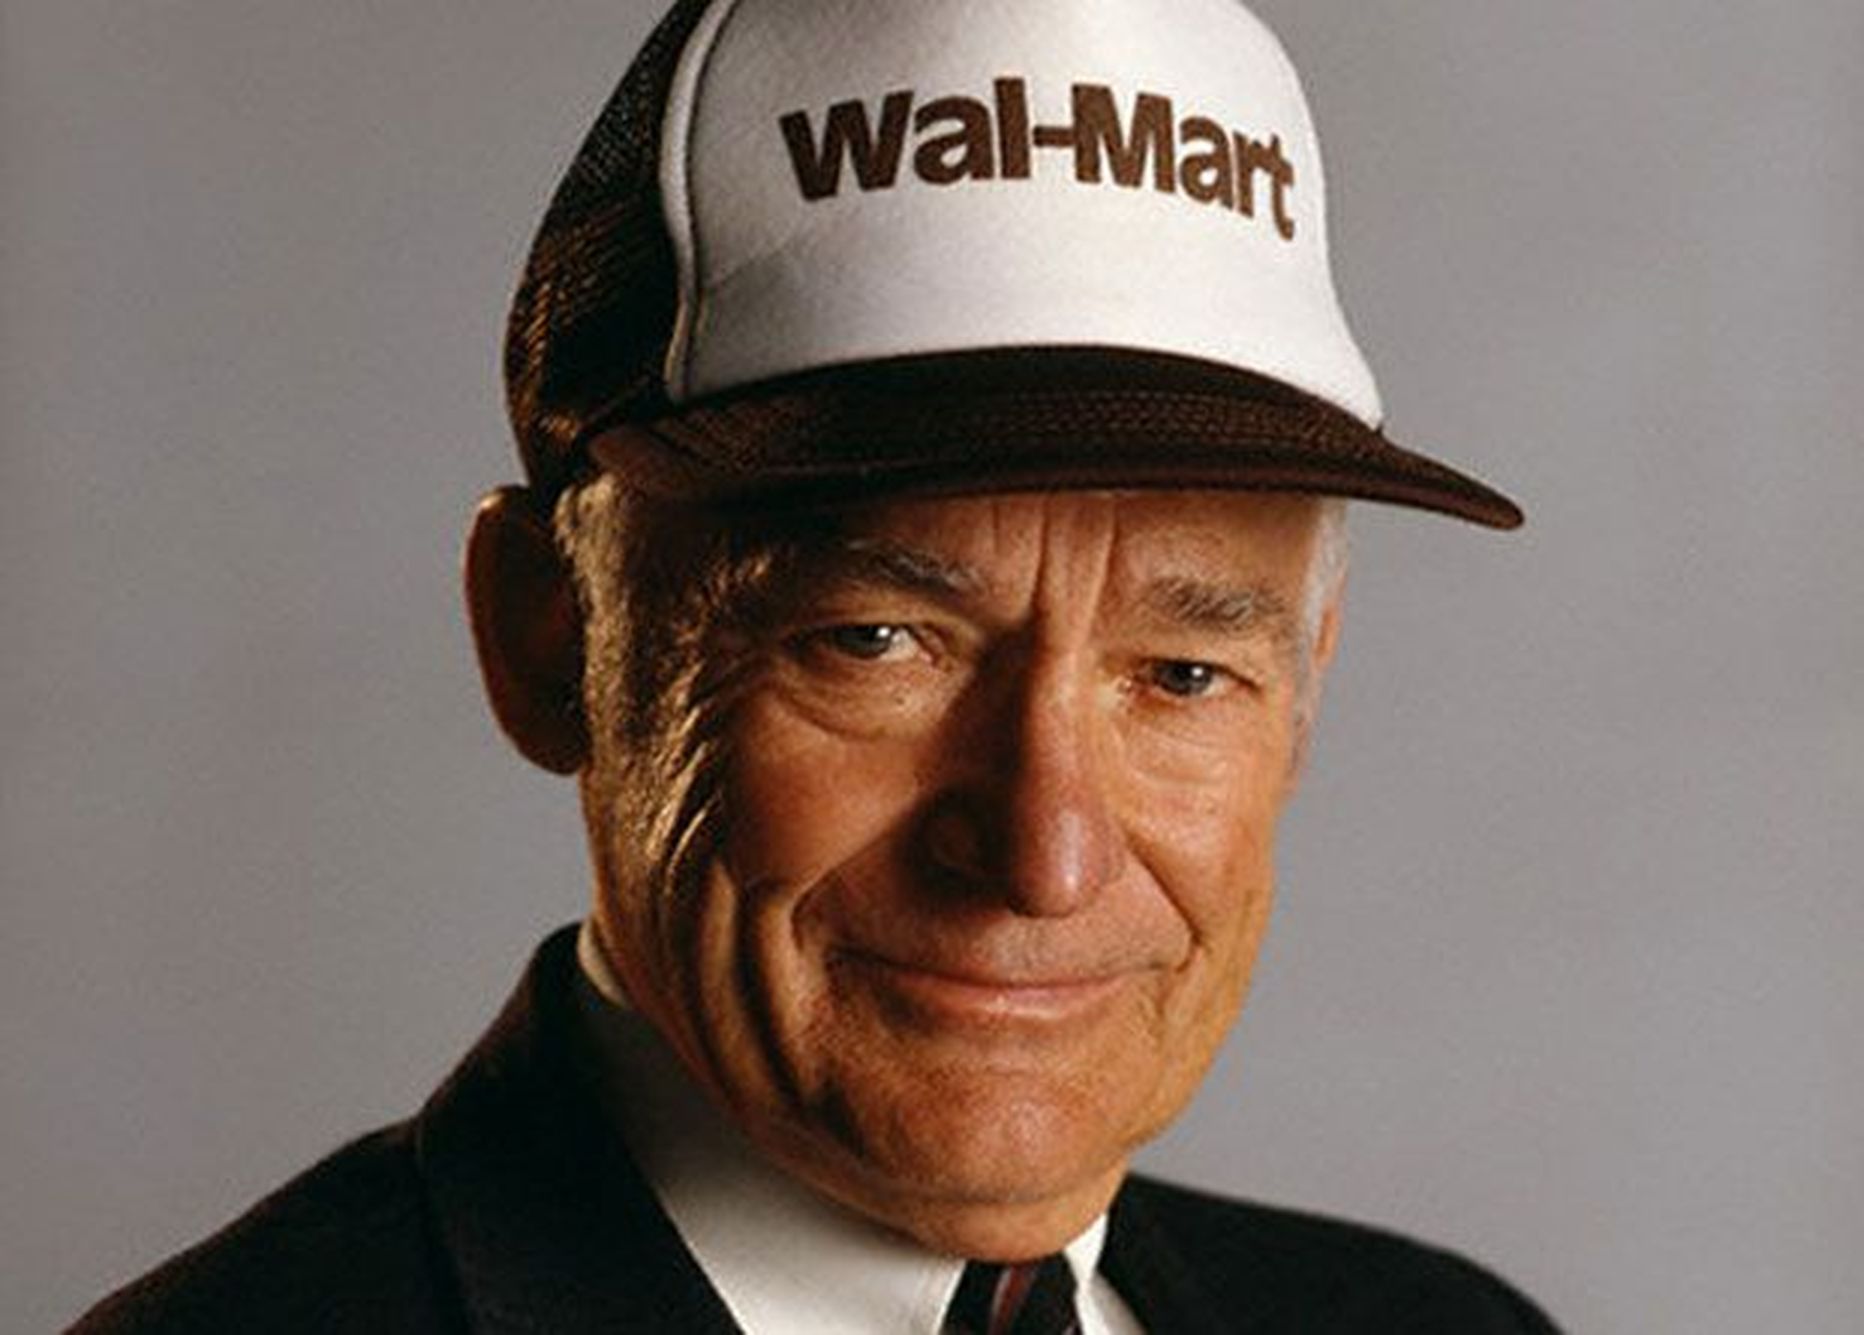 Waltonite pere rikkusele pani aluse Wal-Marti asutaja Sam Walton.